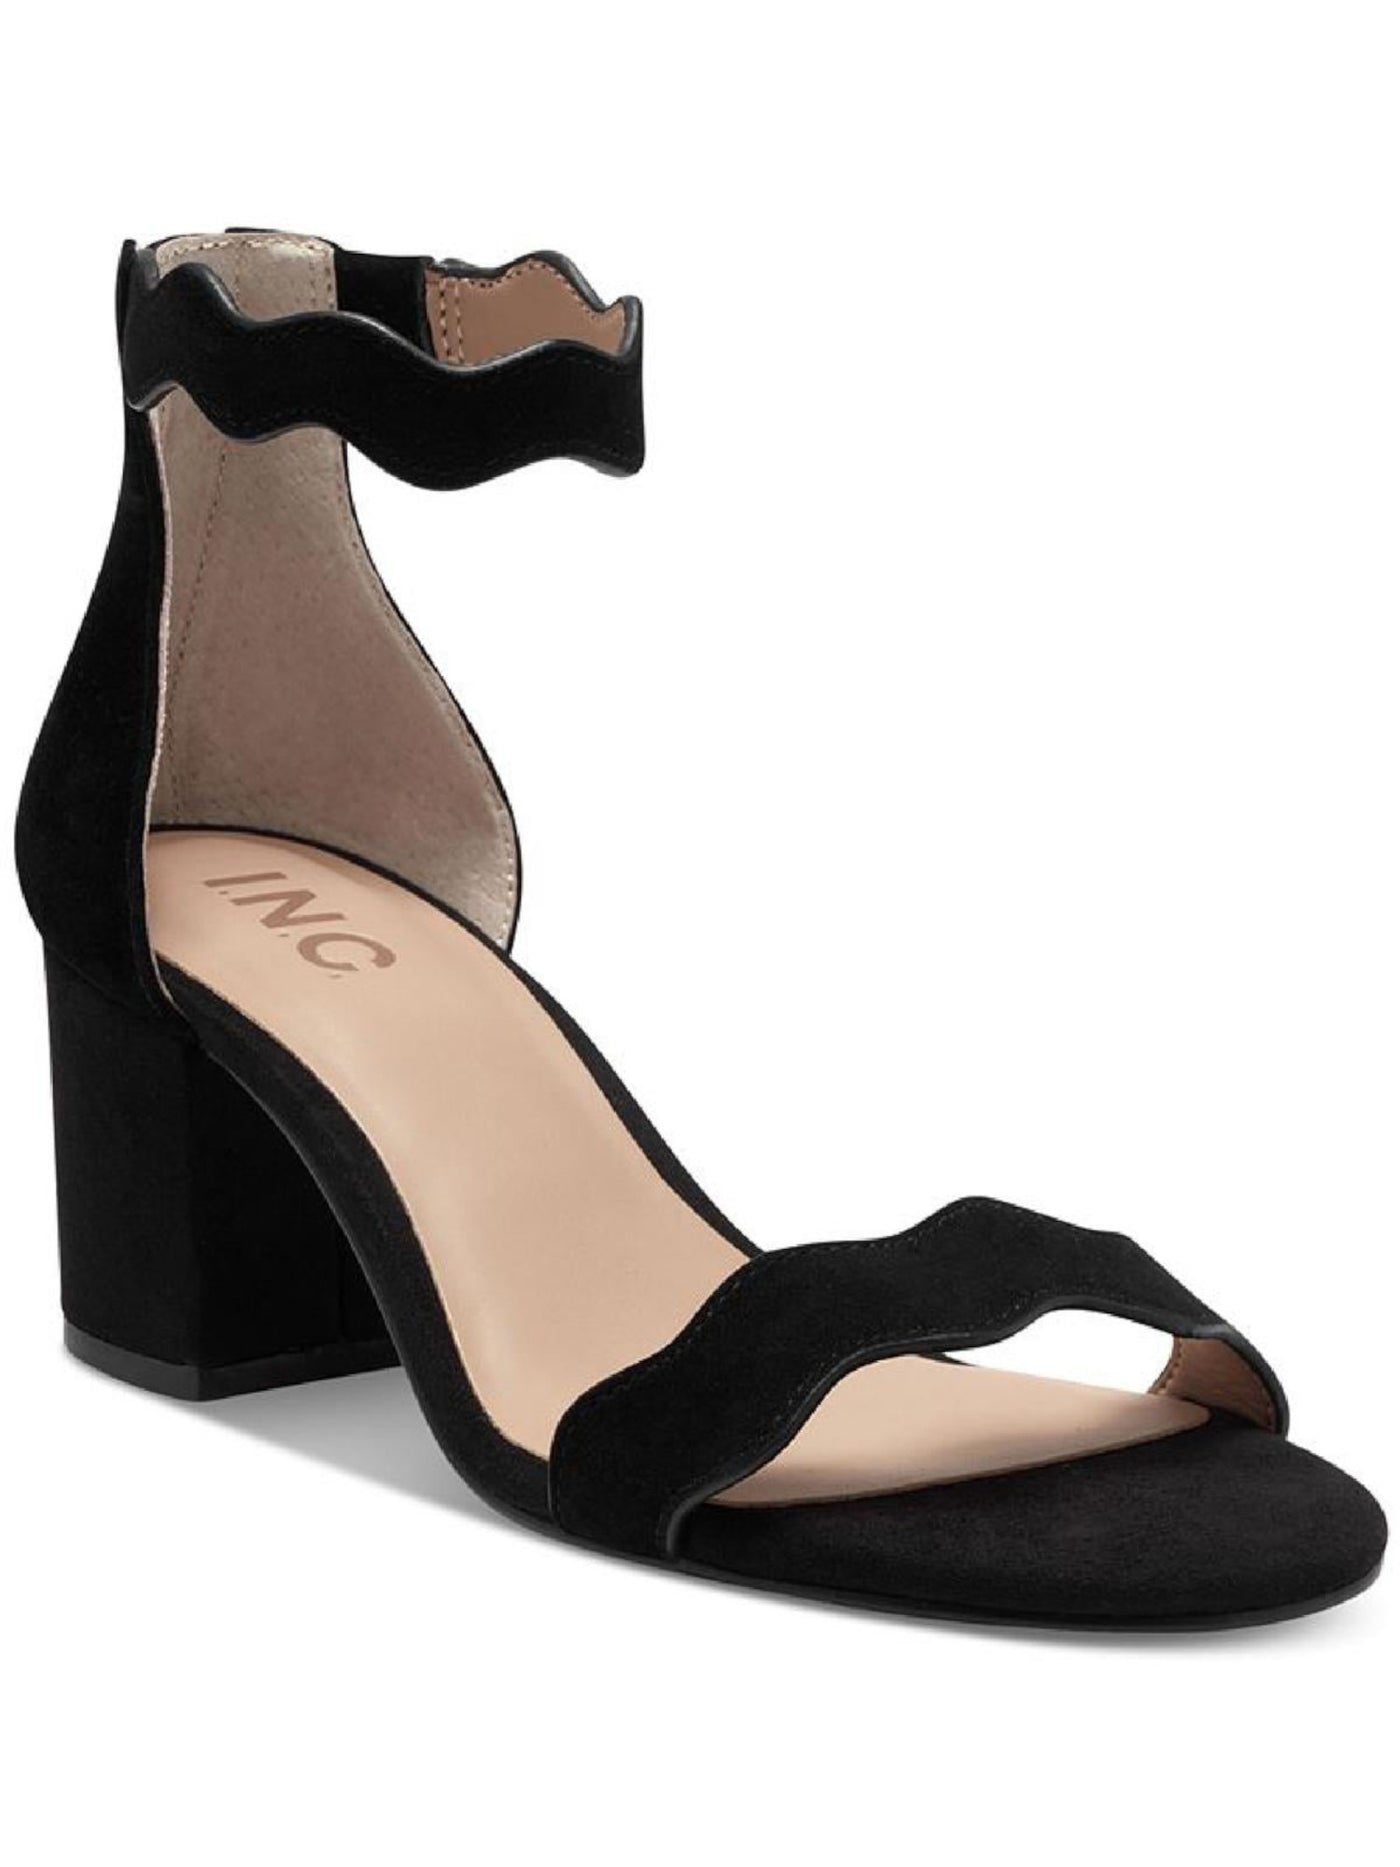 INC Womens Black Rhinestone Ankle Strap Scalloped Kadwin Round Toe Block Heel Zip-Up Dress Sandals Shoes 5.5 M